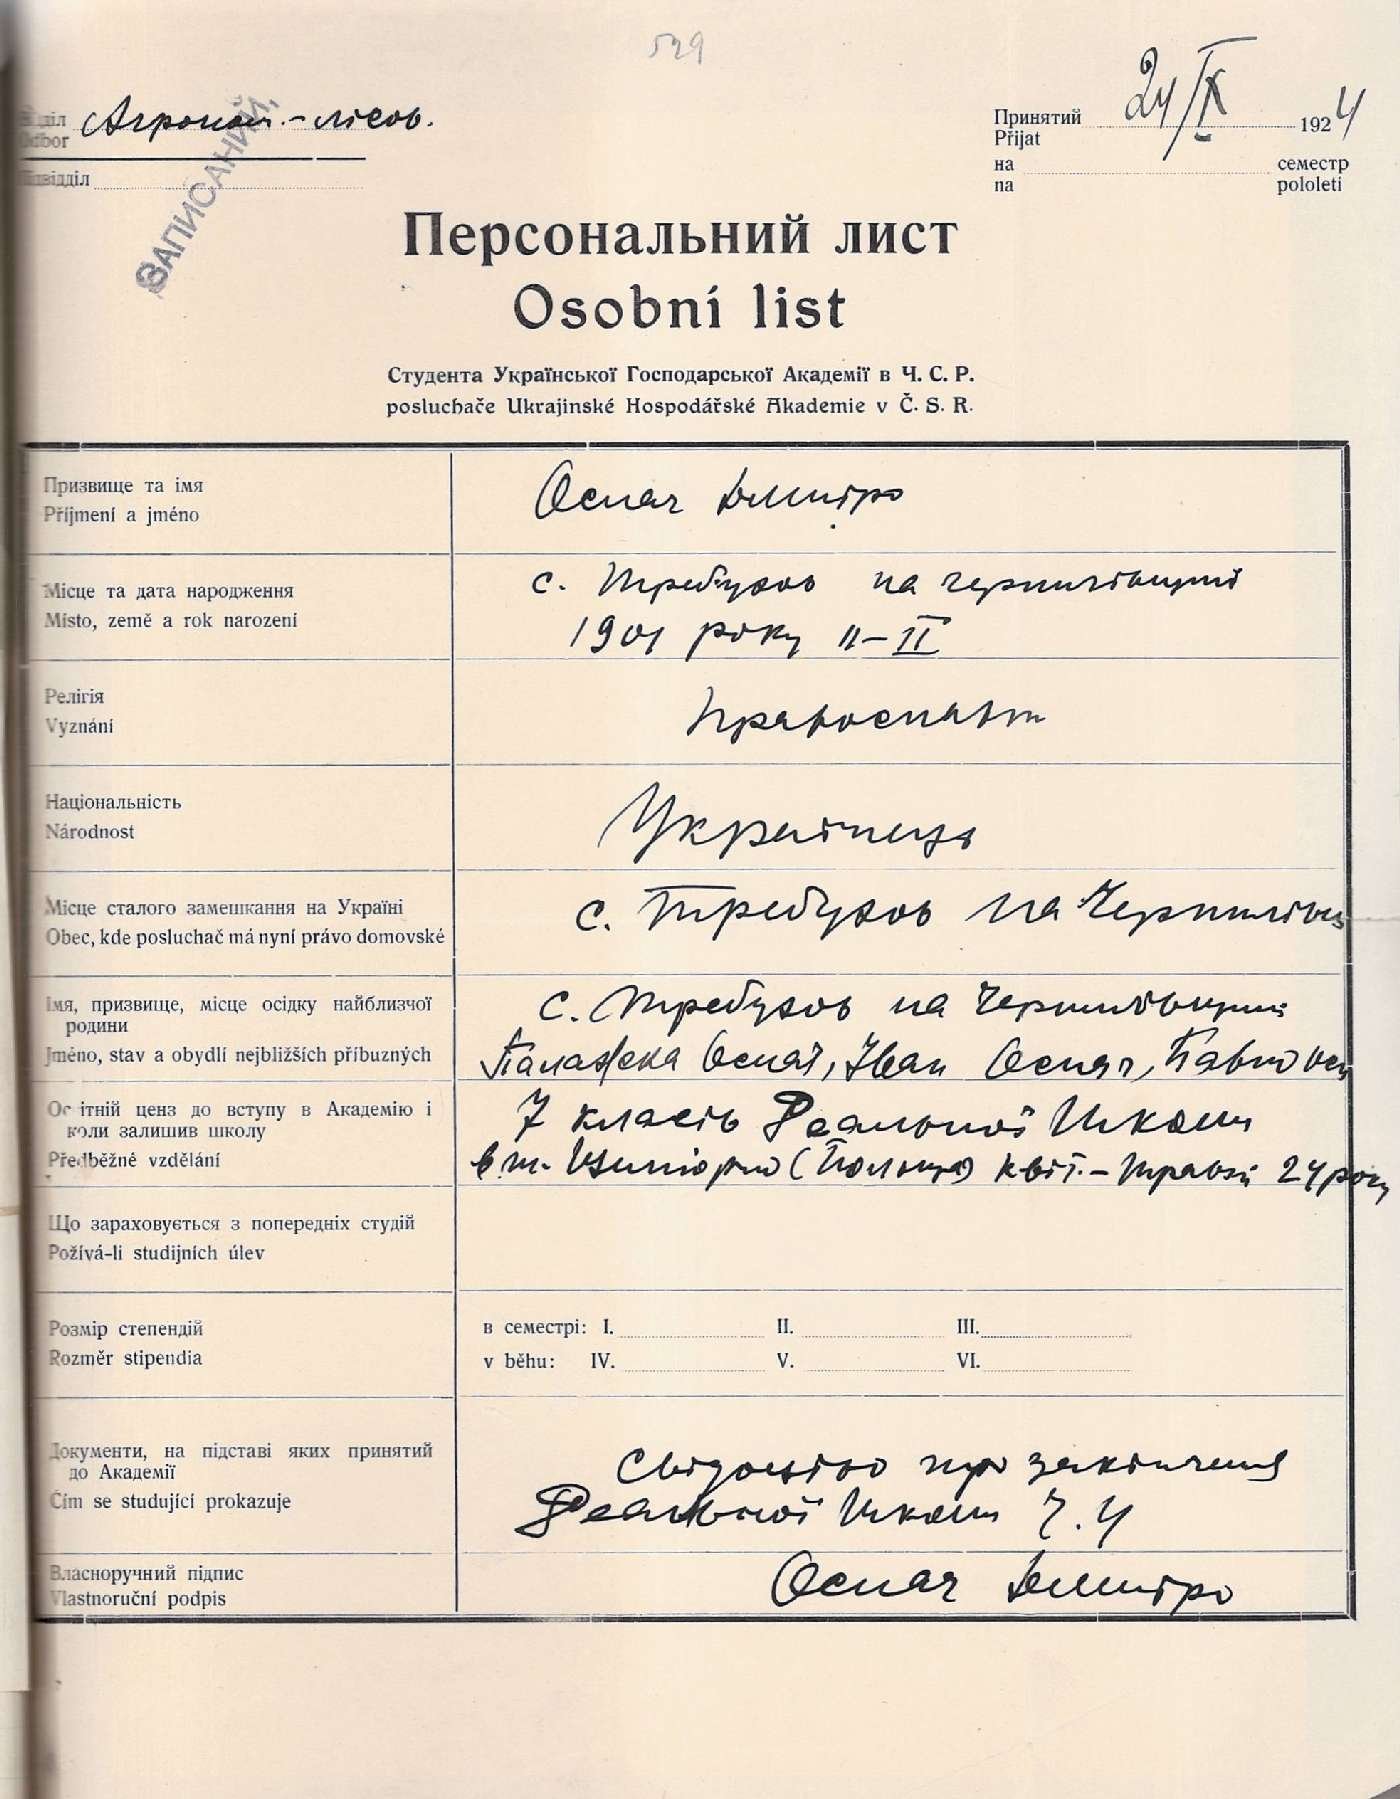 Персональний лист студента Української господарської академії в ЧСР Дмитра Оснача. 24 жовтня 1924 р.